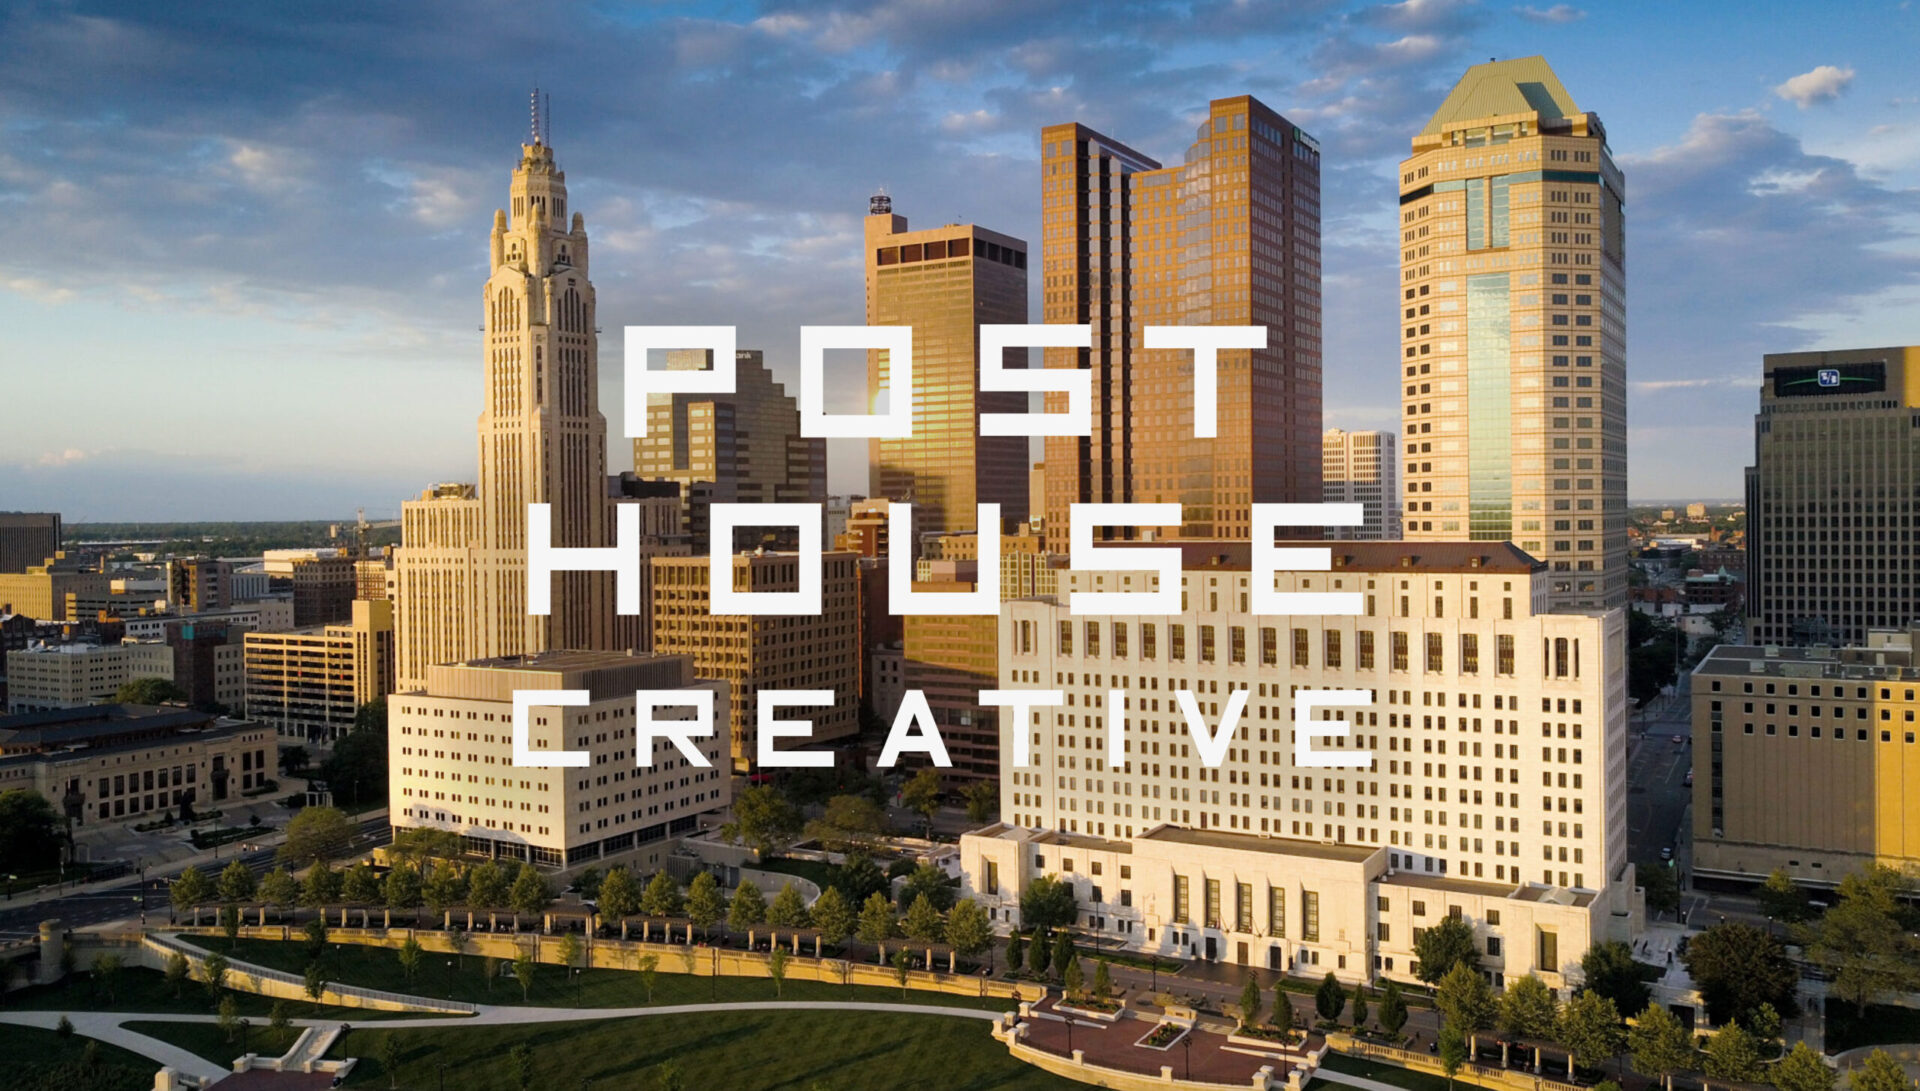 Post House Creative text overlay on image of Ohio skyline